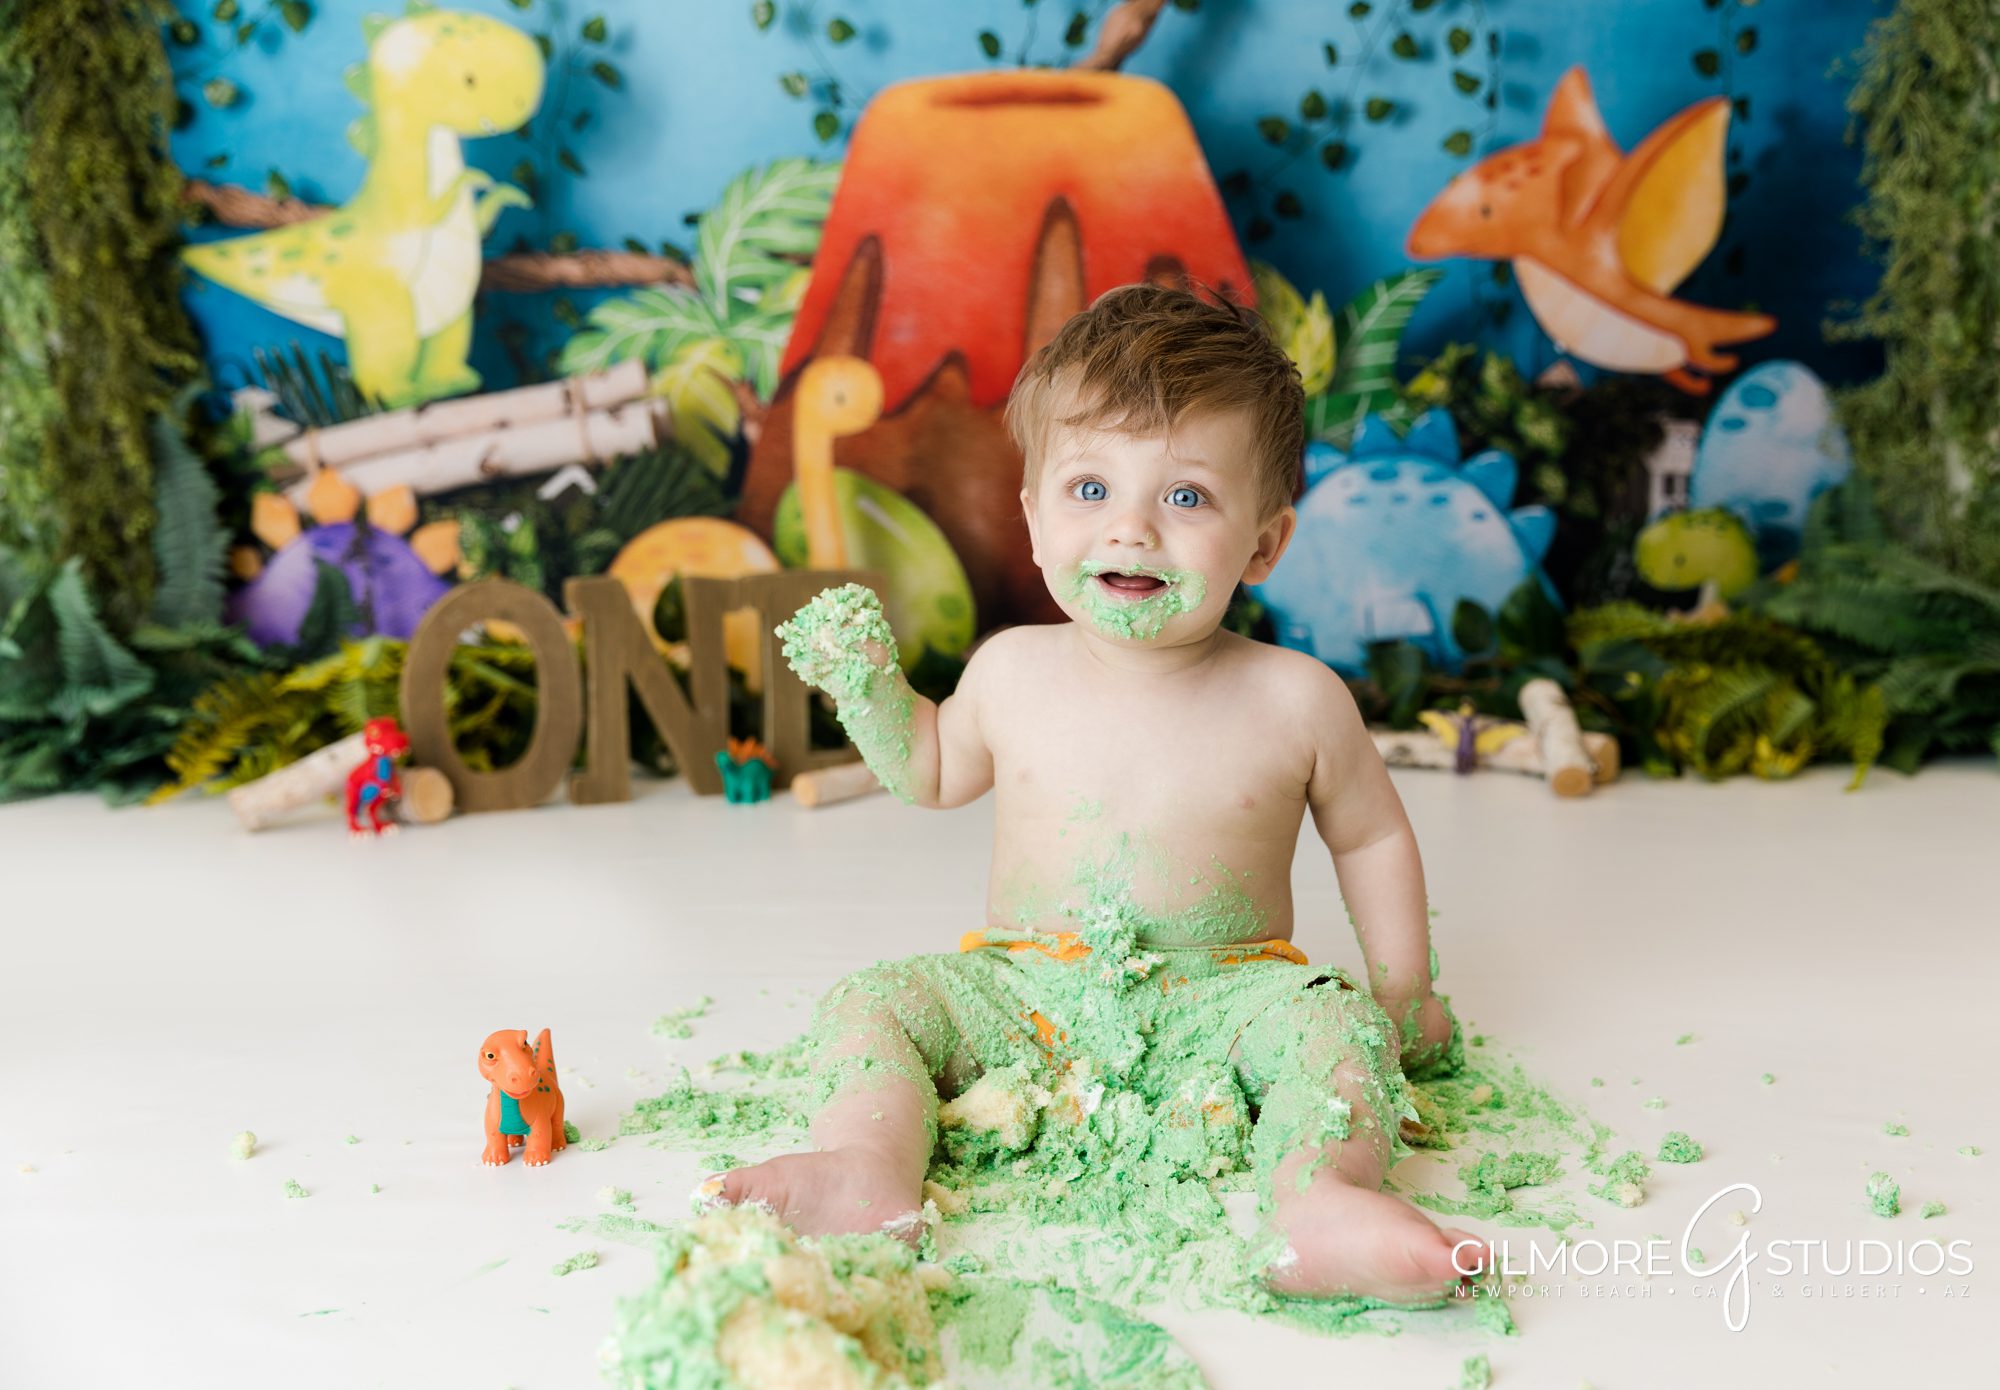 Dinosaur Cake Smash, volcano, jungle, one year old boy, smash cake, first birthday, custom set design, 1st year portrait session, gilmore studios, Gilbert AZ, Newport Beach, CA